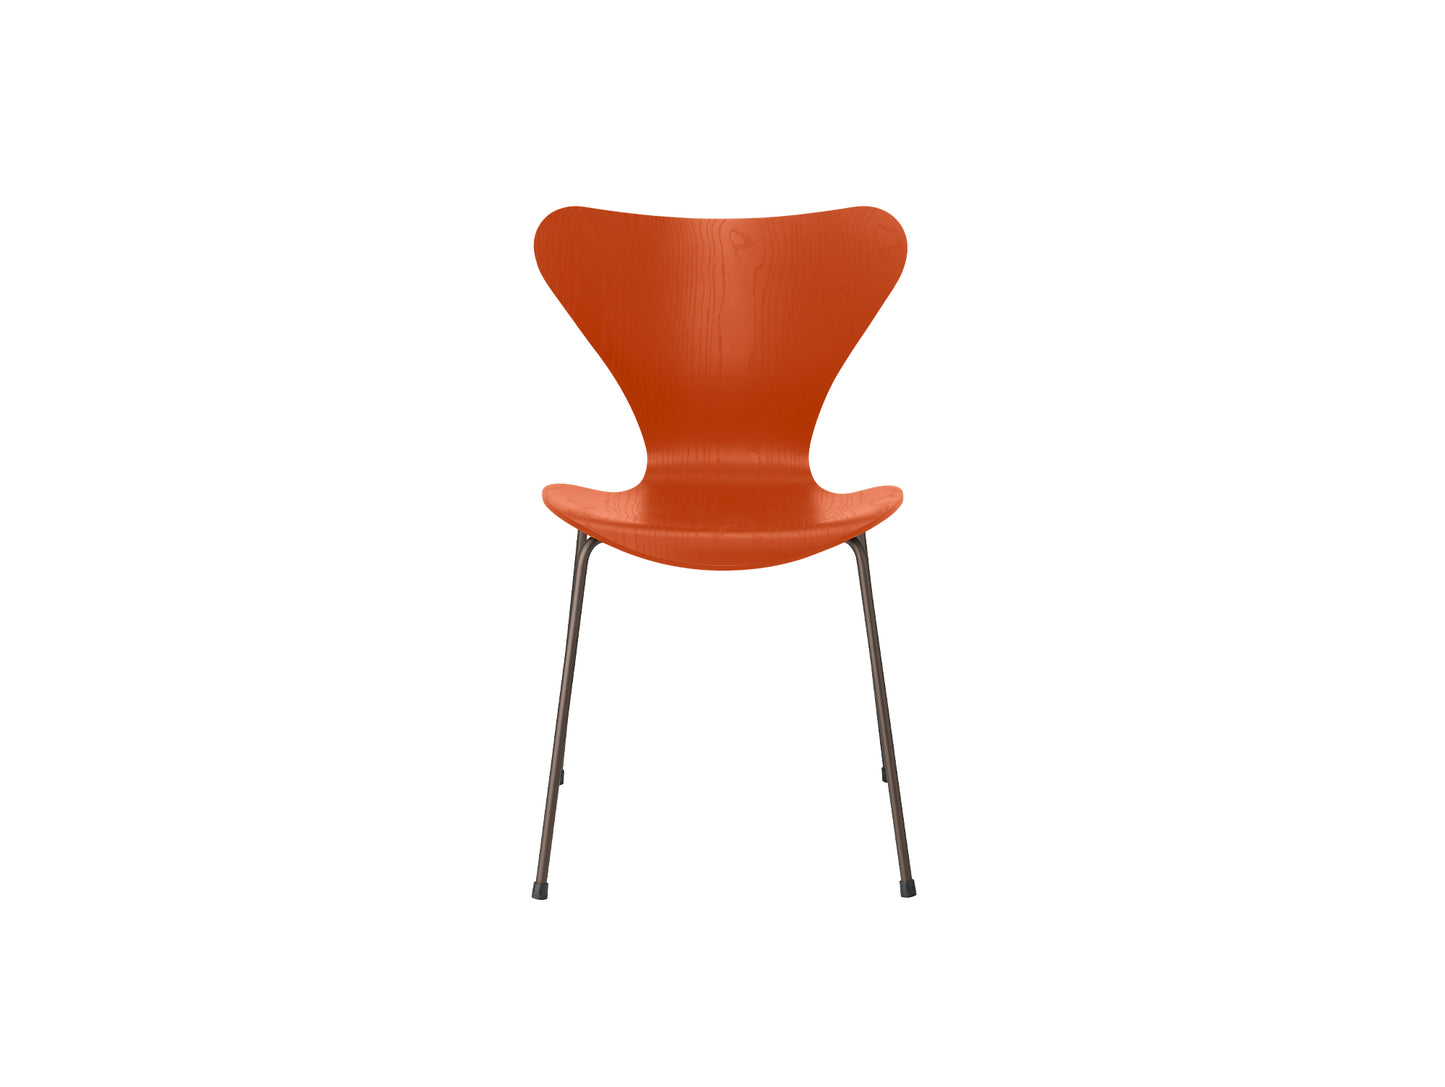 Series 7™ 3107 Dining Chair by Fritz Hansen - Paradise Orange Coloured Ash Veneer Shell / Brown Bronze Steel